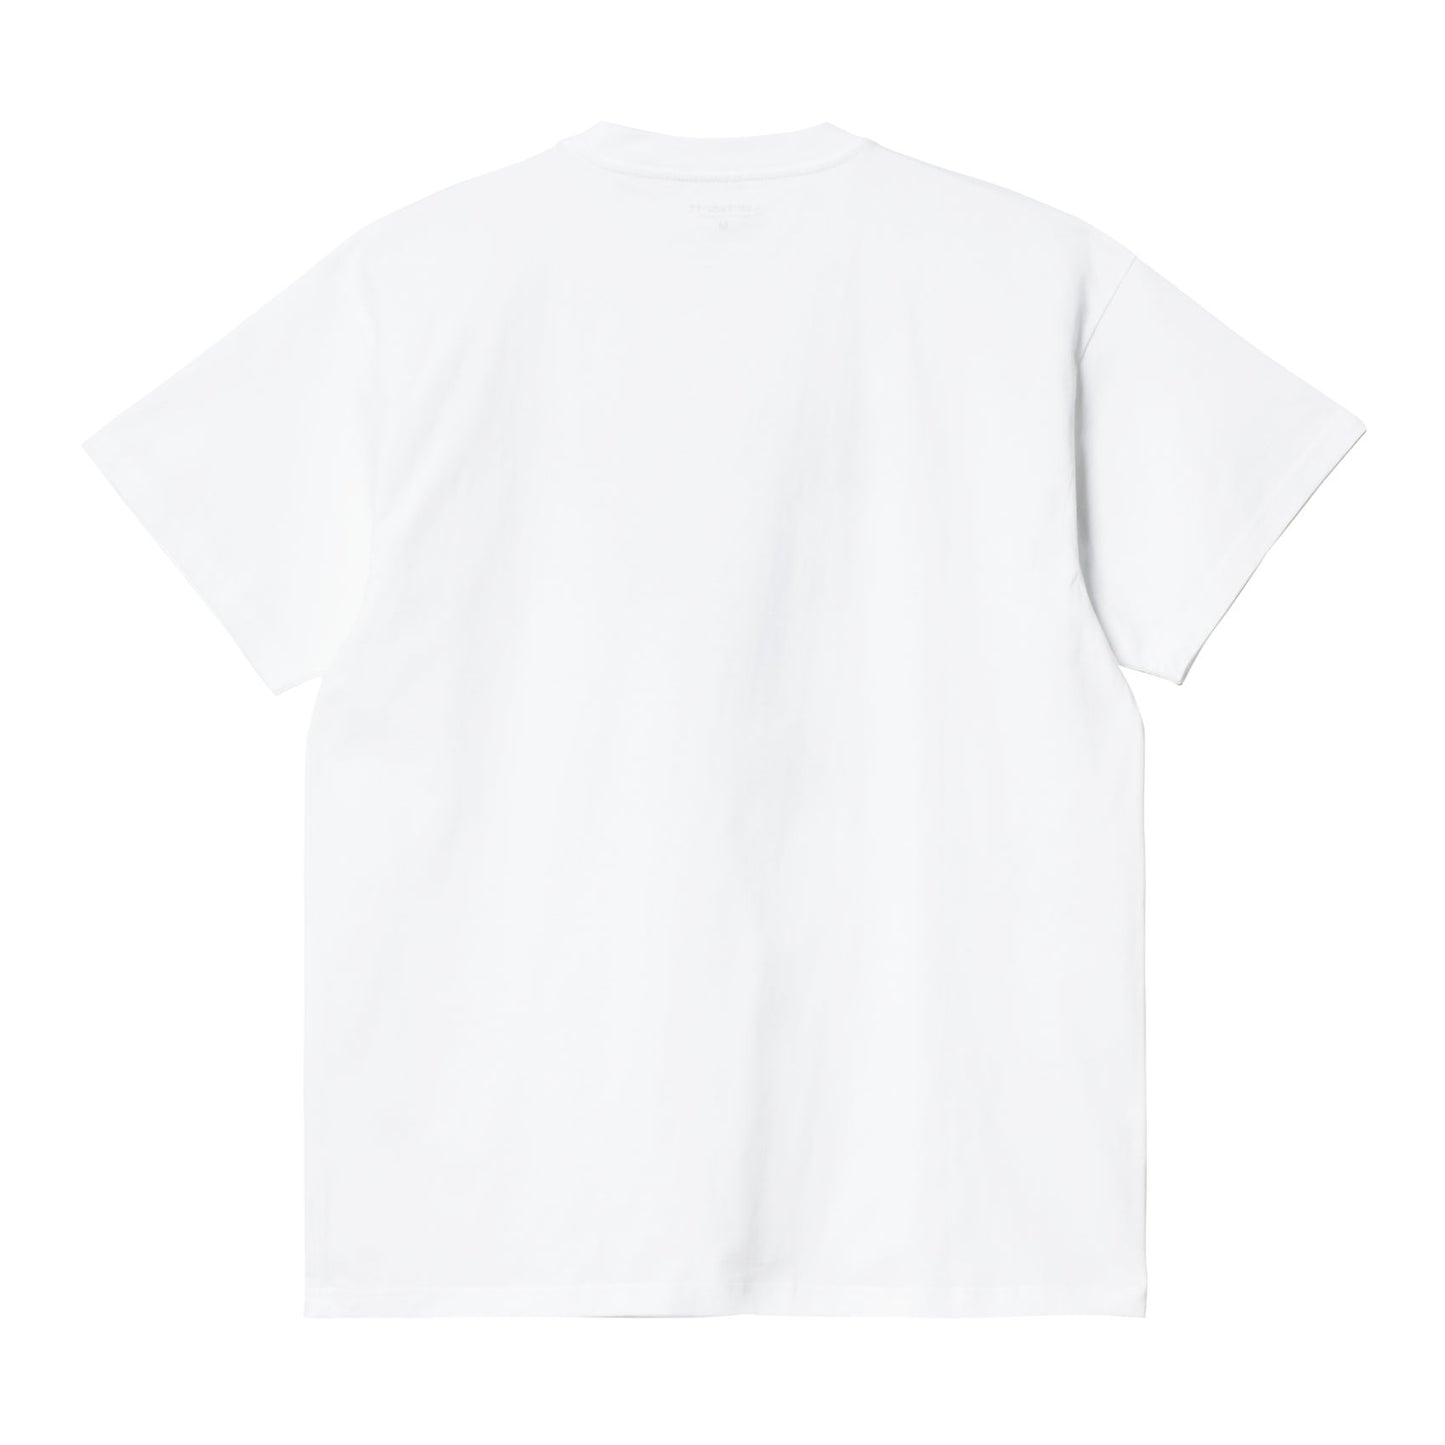 Carhartt WIP CRHT Ducks T-Shirt White. Foto de trás.